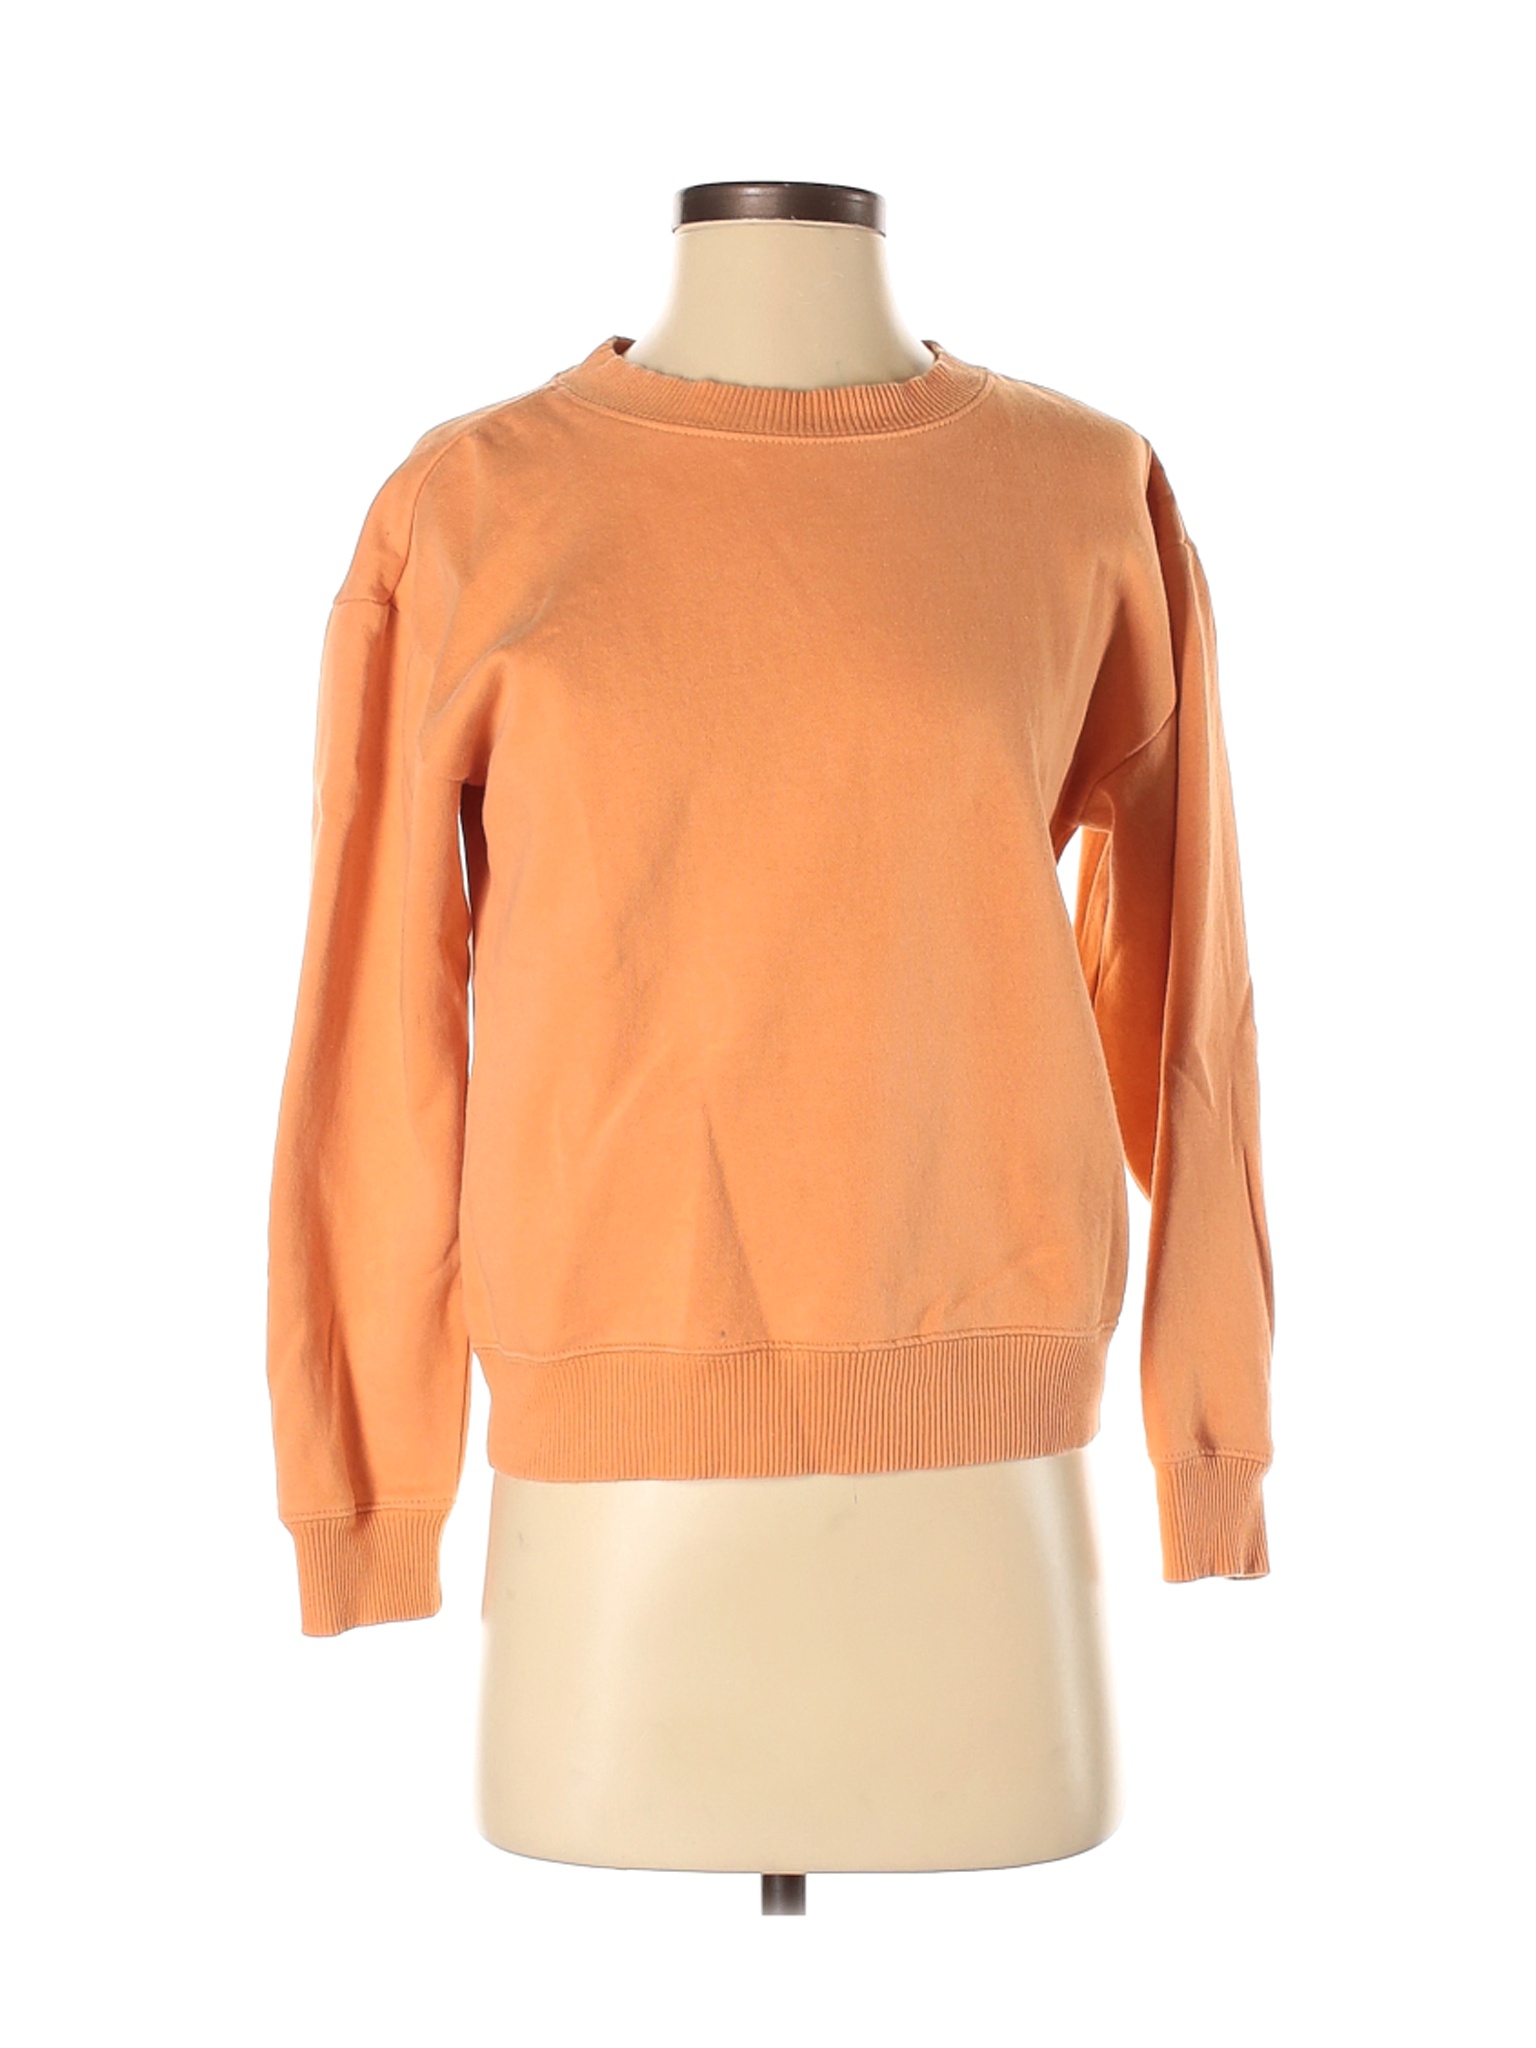 Urban Outfitters Women Orange Pullover Sweater S | eBay